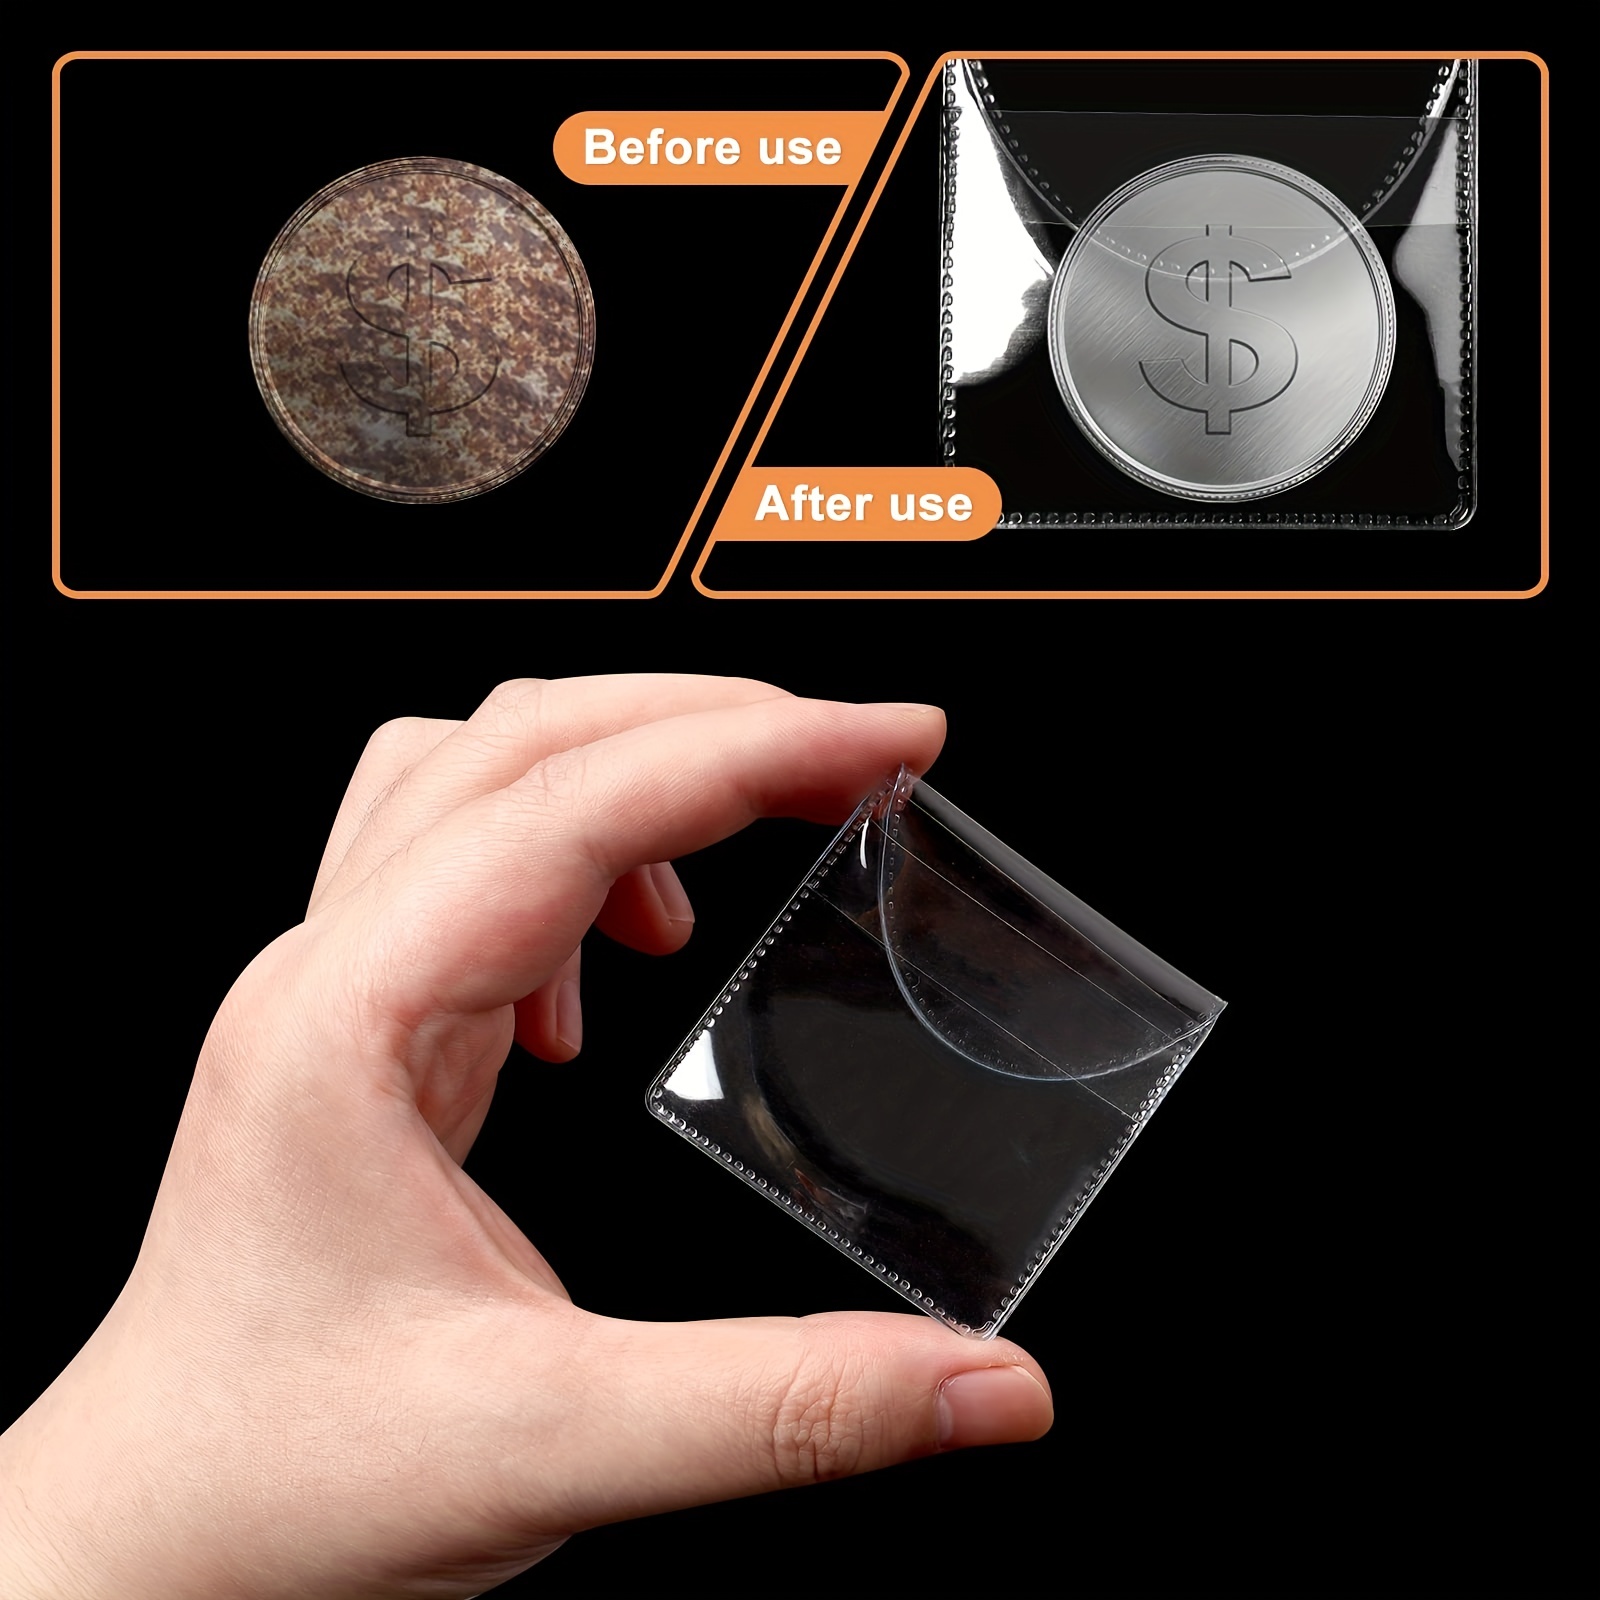 20 piezas de un solo bolsillo para monedas, funda transparente Individual  para monedas, soporte de plástico para monedas pequeñas - AliExpress